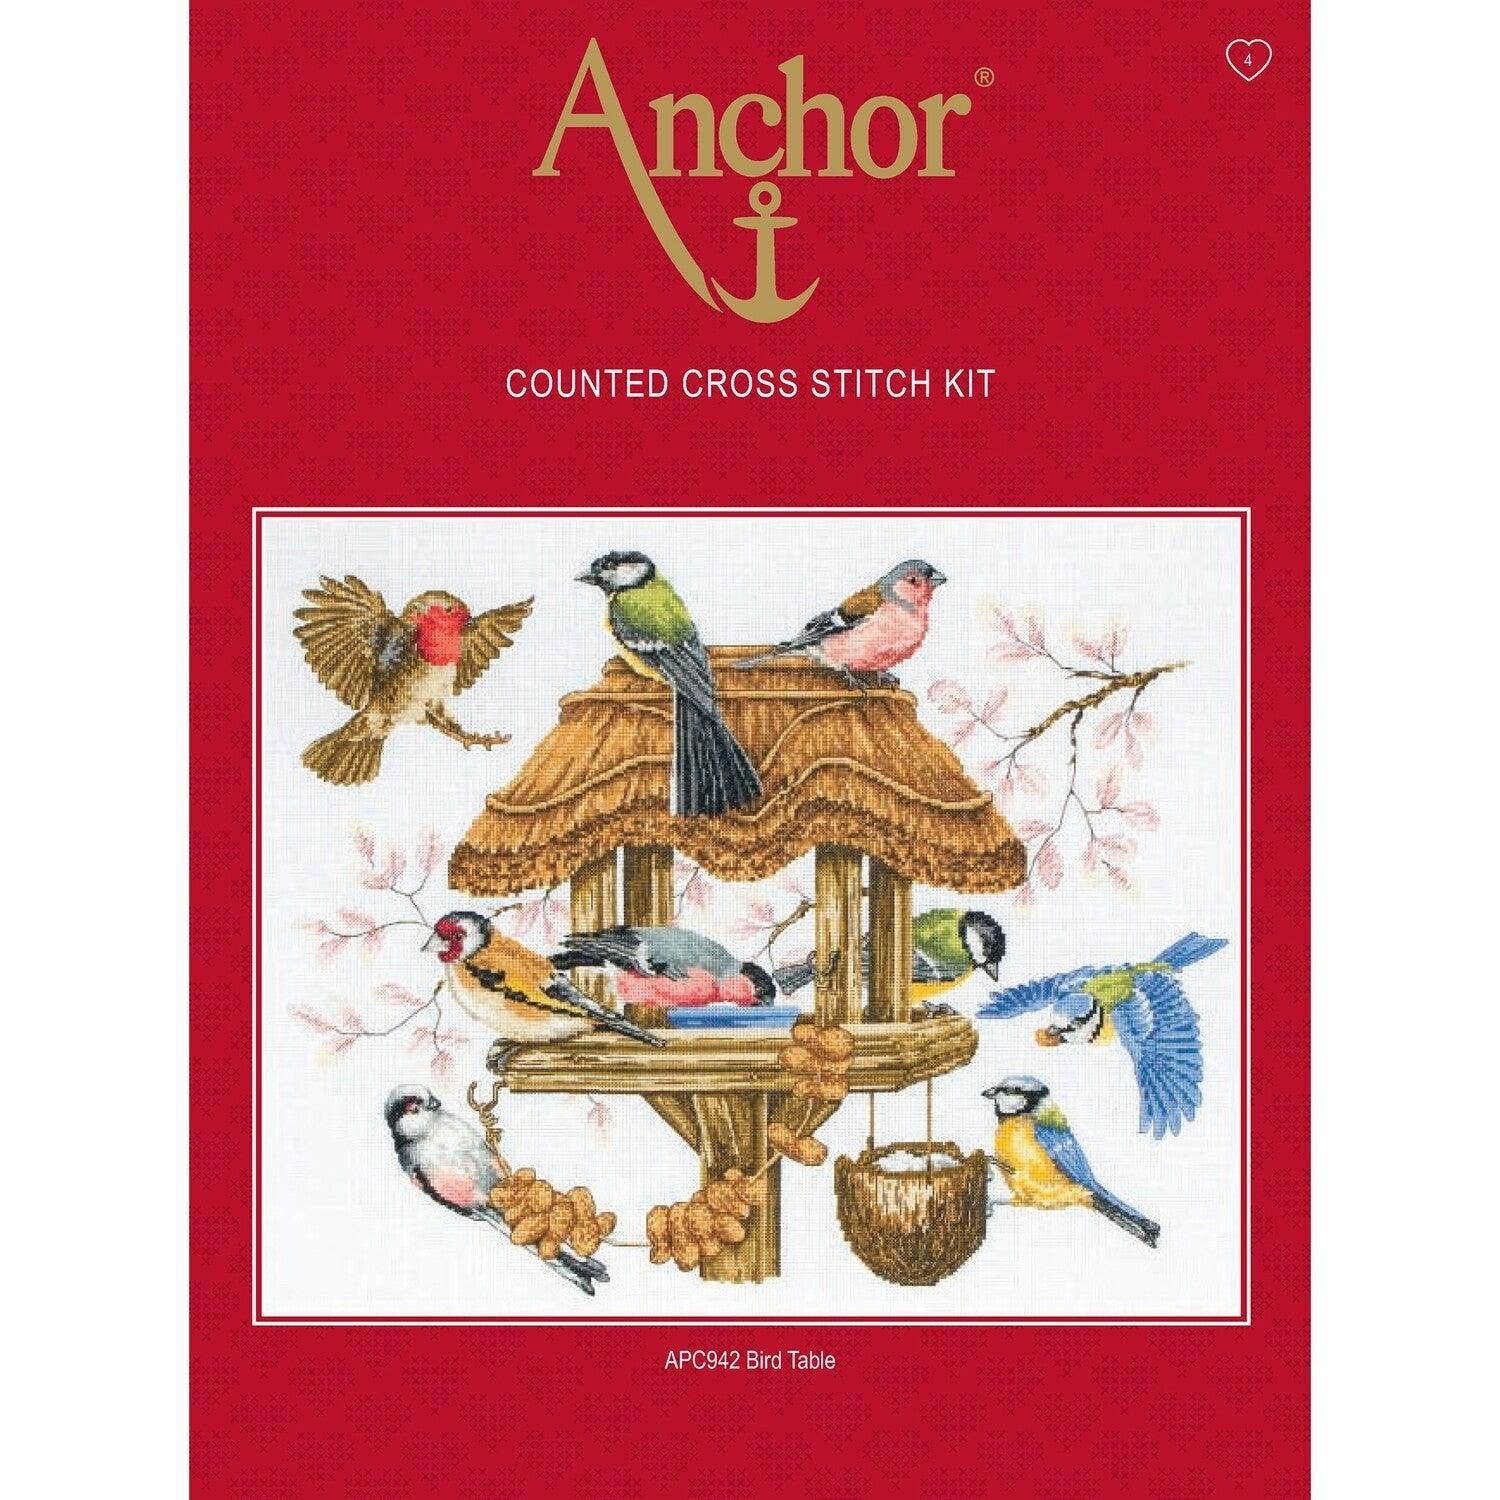 Anchor Essentials Cross Stitch Kit - APC942, Bird Table - Luca-S Cross Stitch Kits